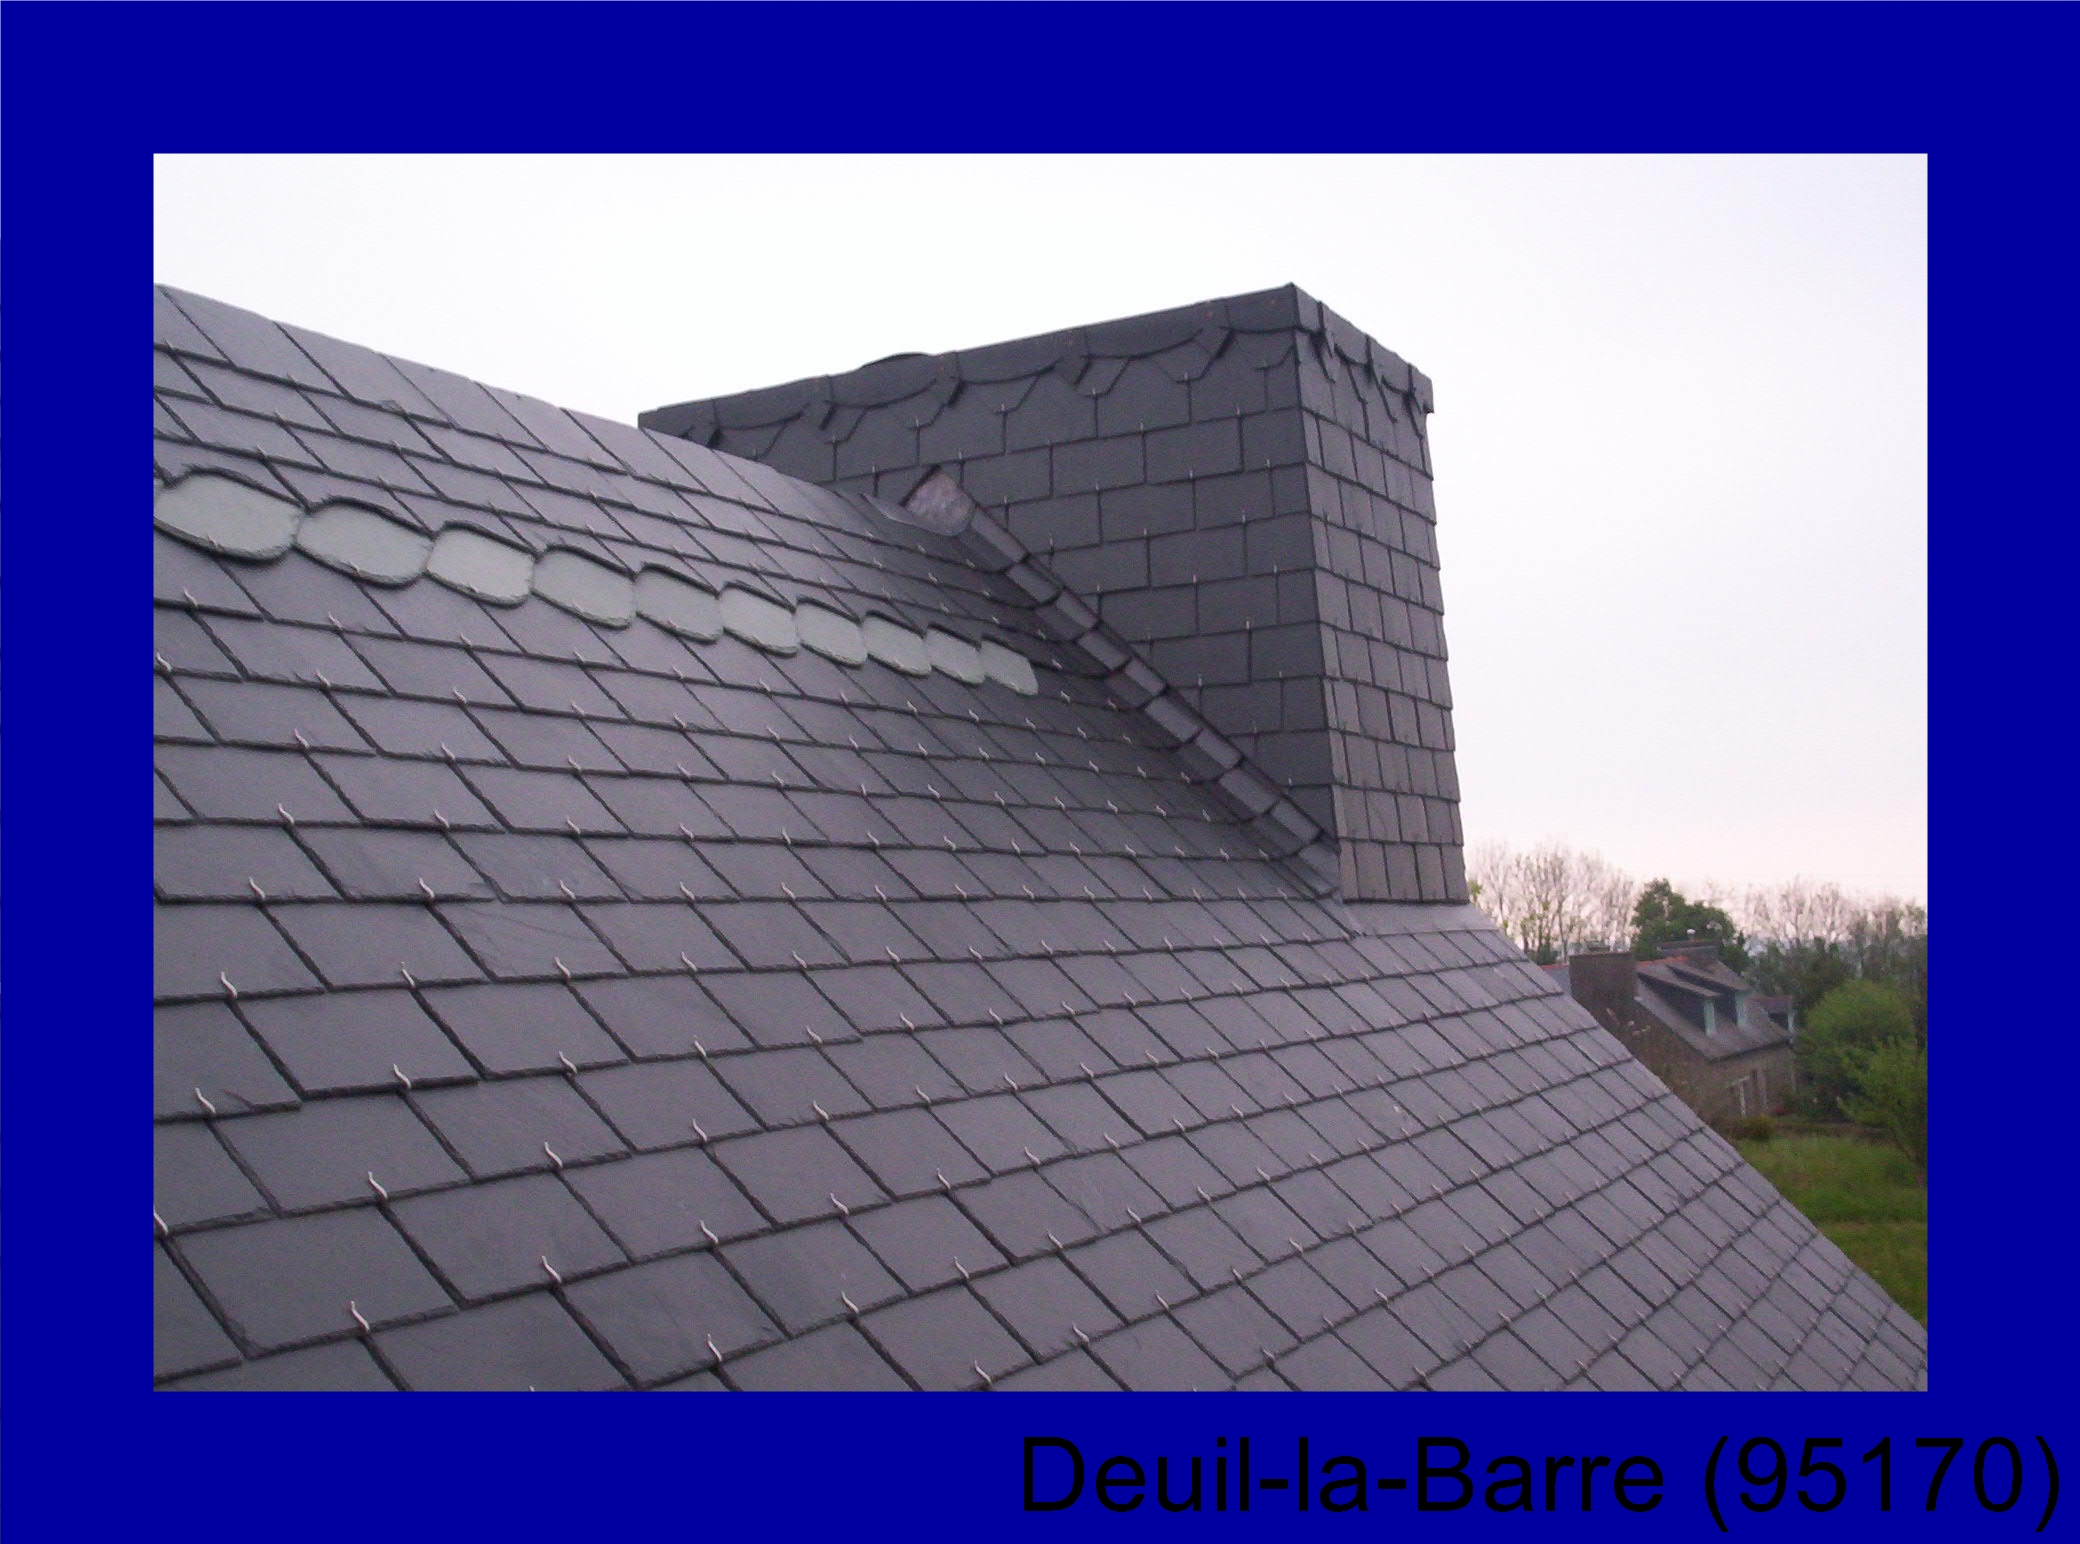 toiture zinc 95 Deuil-la-Barre-95170